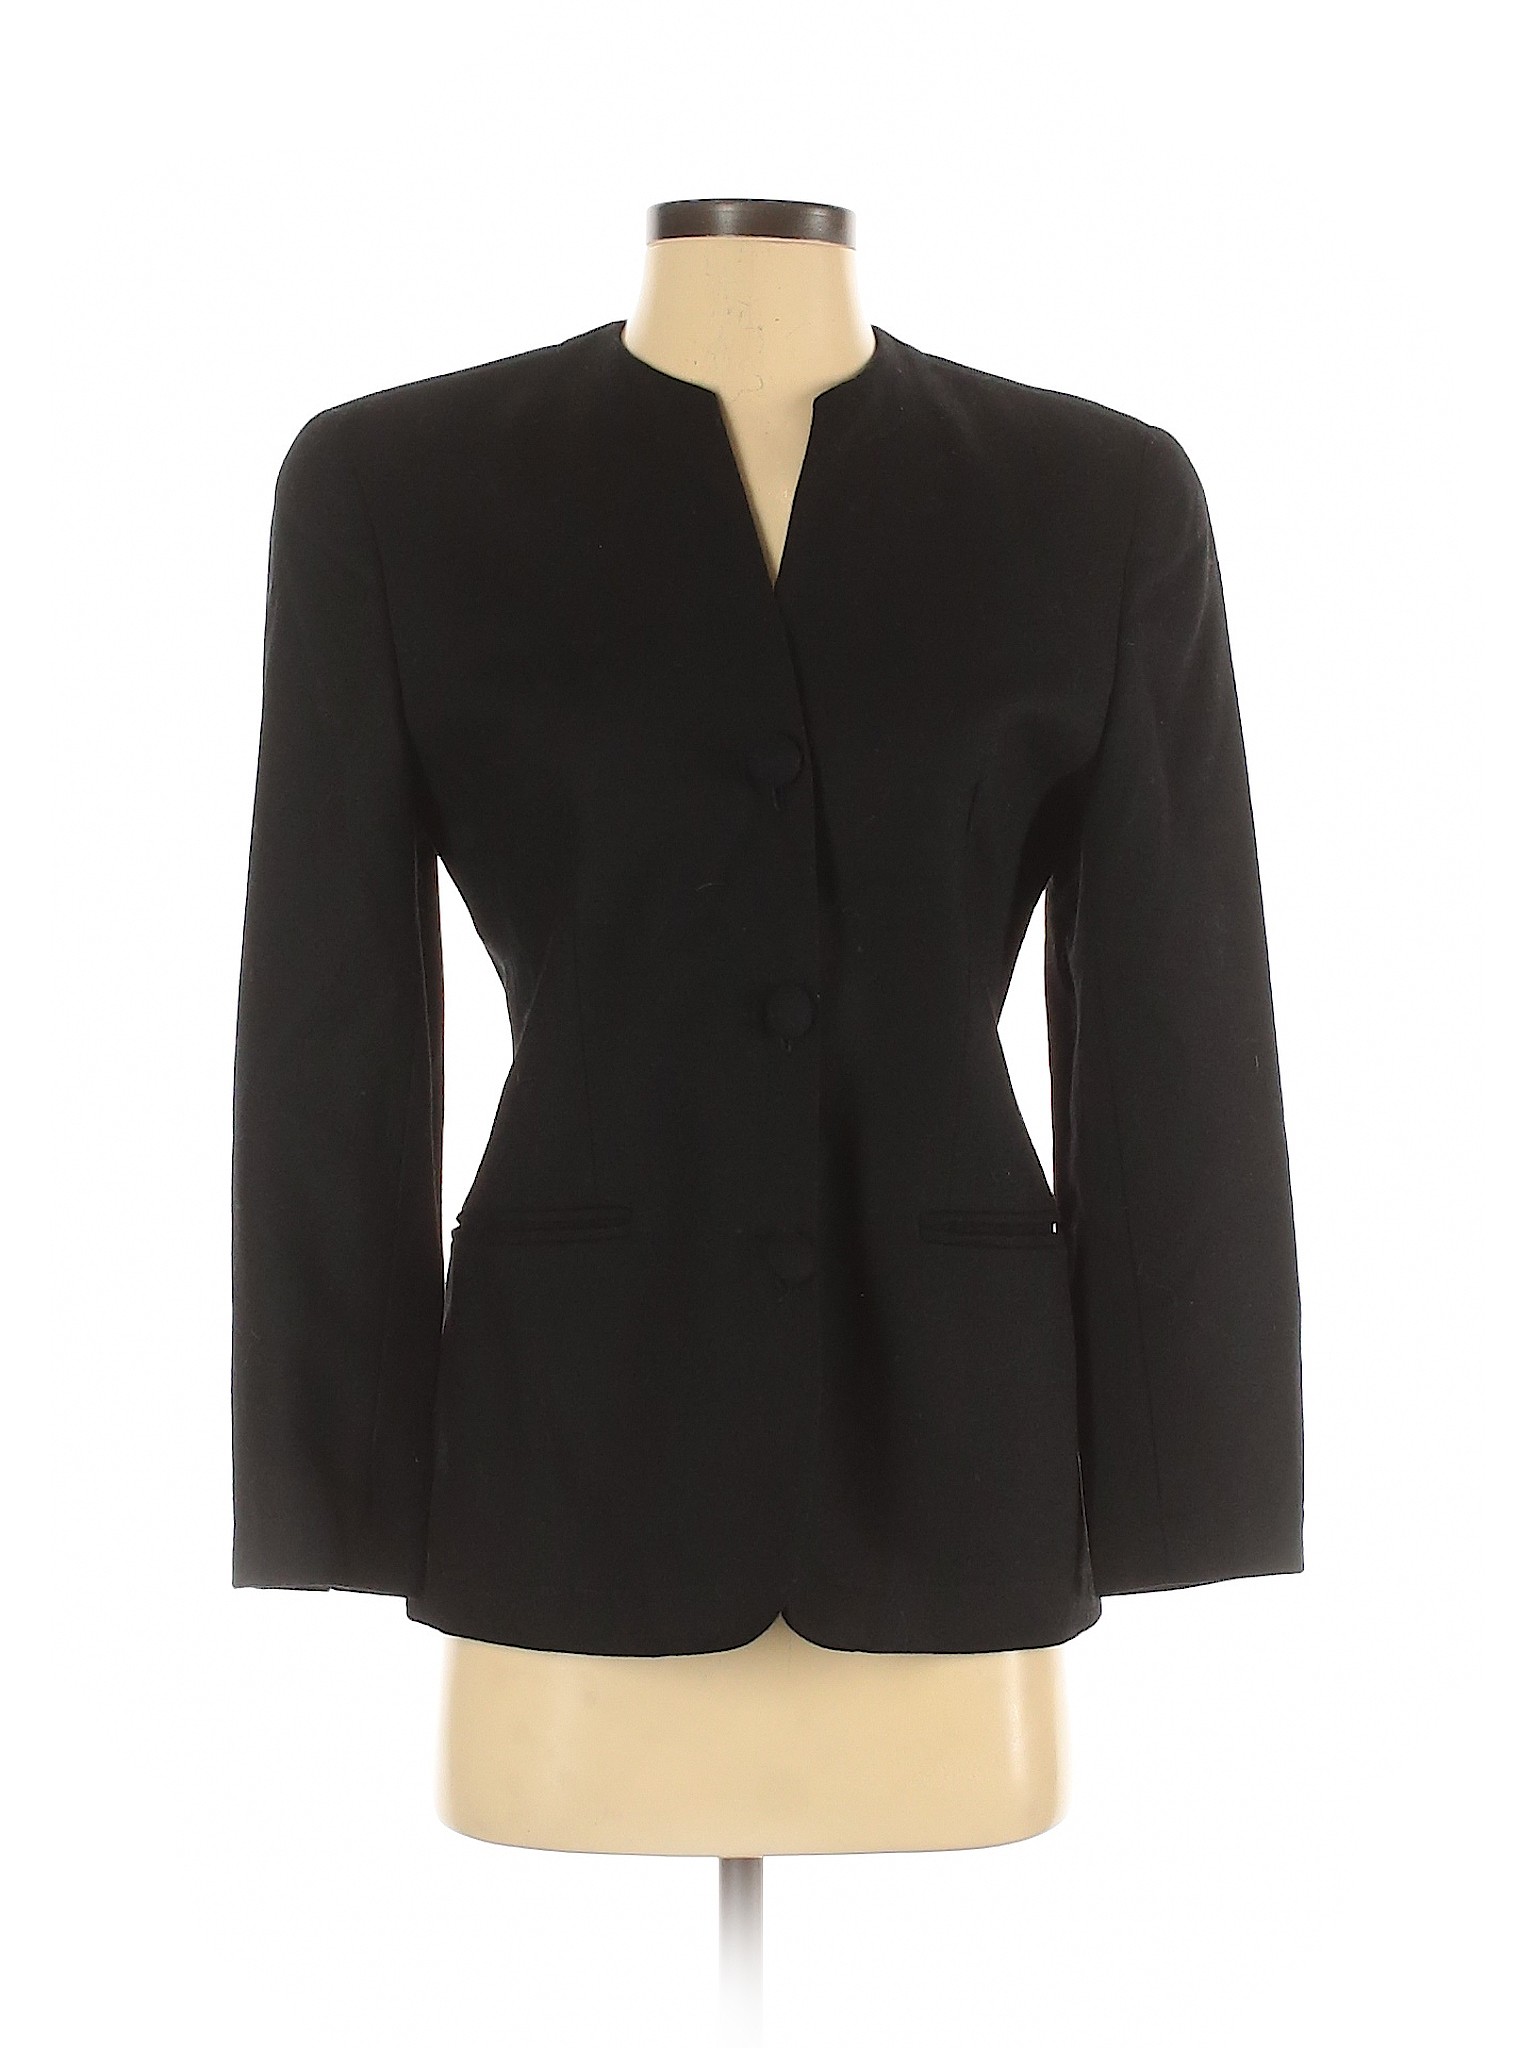 Jones New York Women Black Wool Coat 4 Petites | eBay